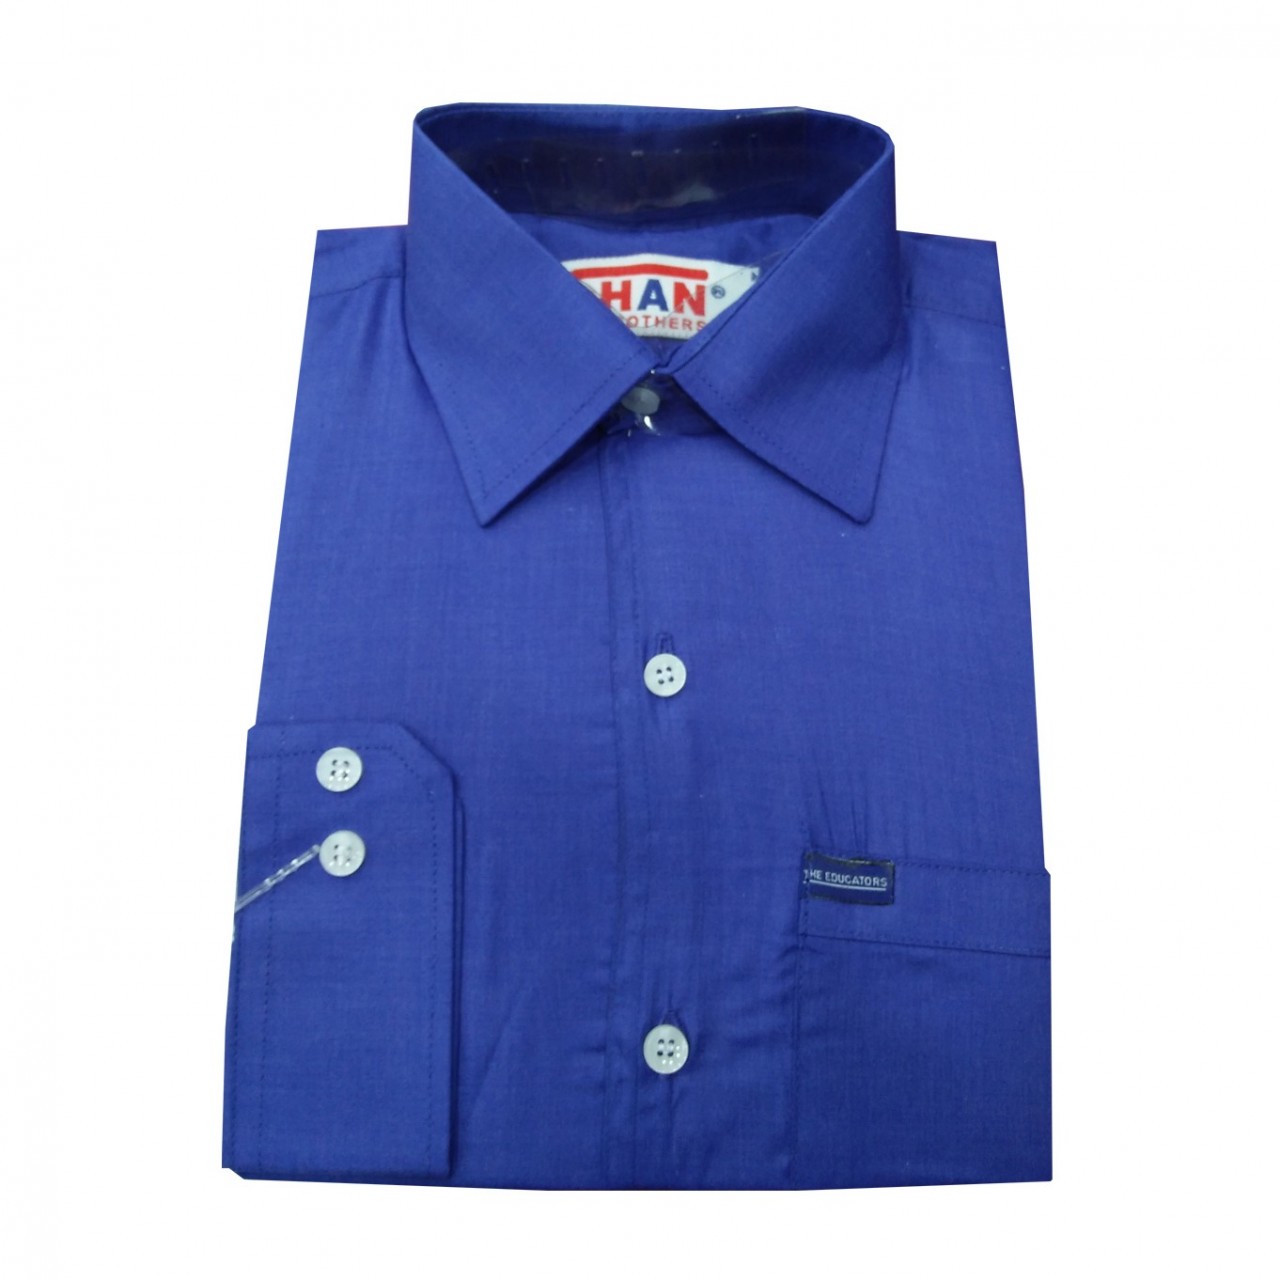 Educator School Uniform Shirt For Boys - Blue